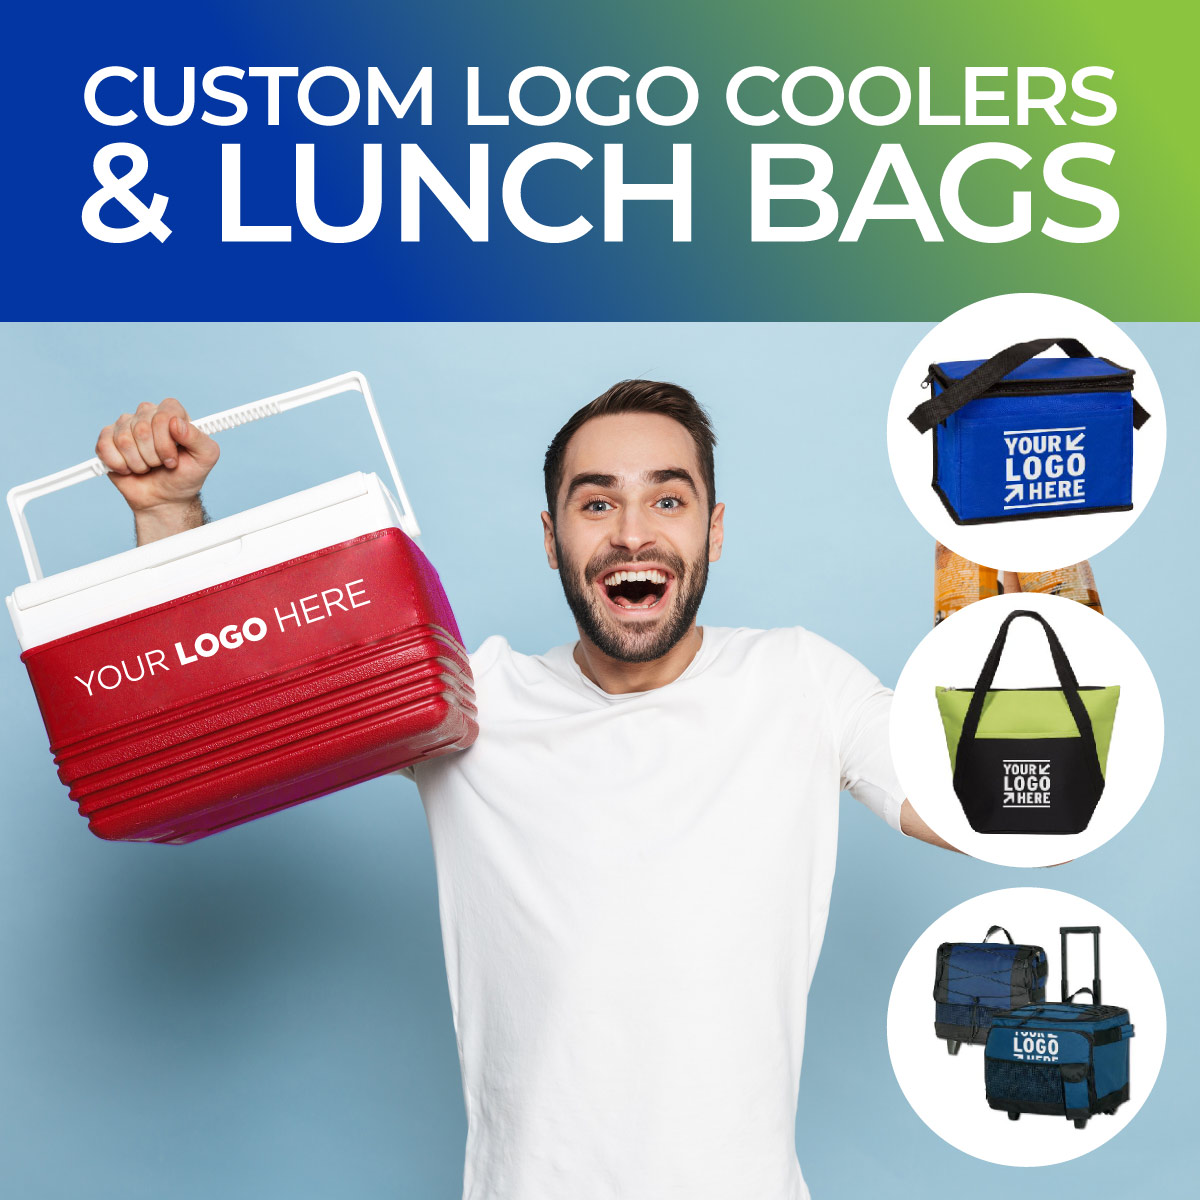 https://leonemarketing.com/wp-content/uploads/2019/07/Coolers-Lunch-Bags-1.jpg